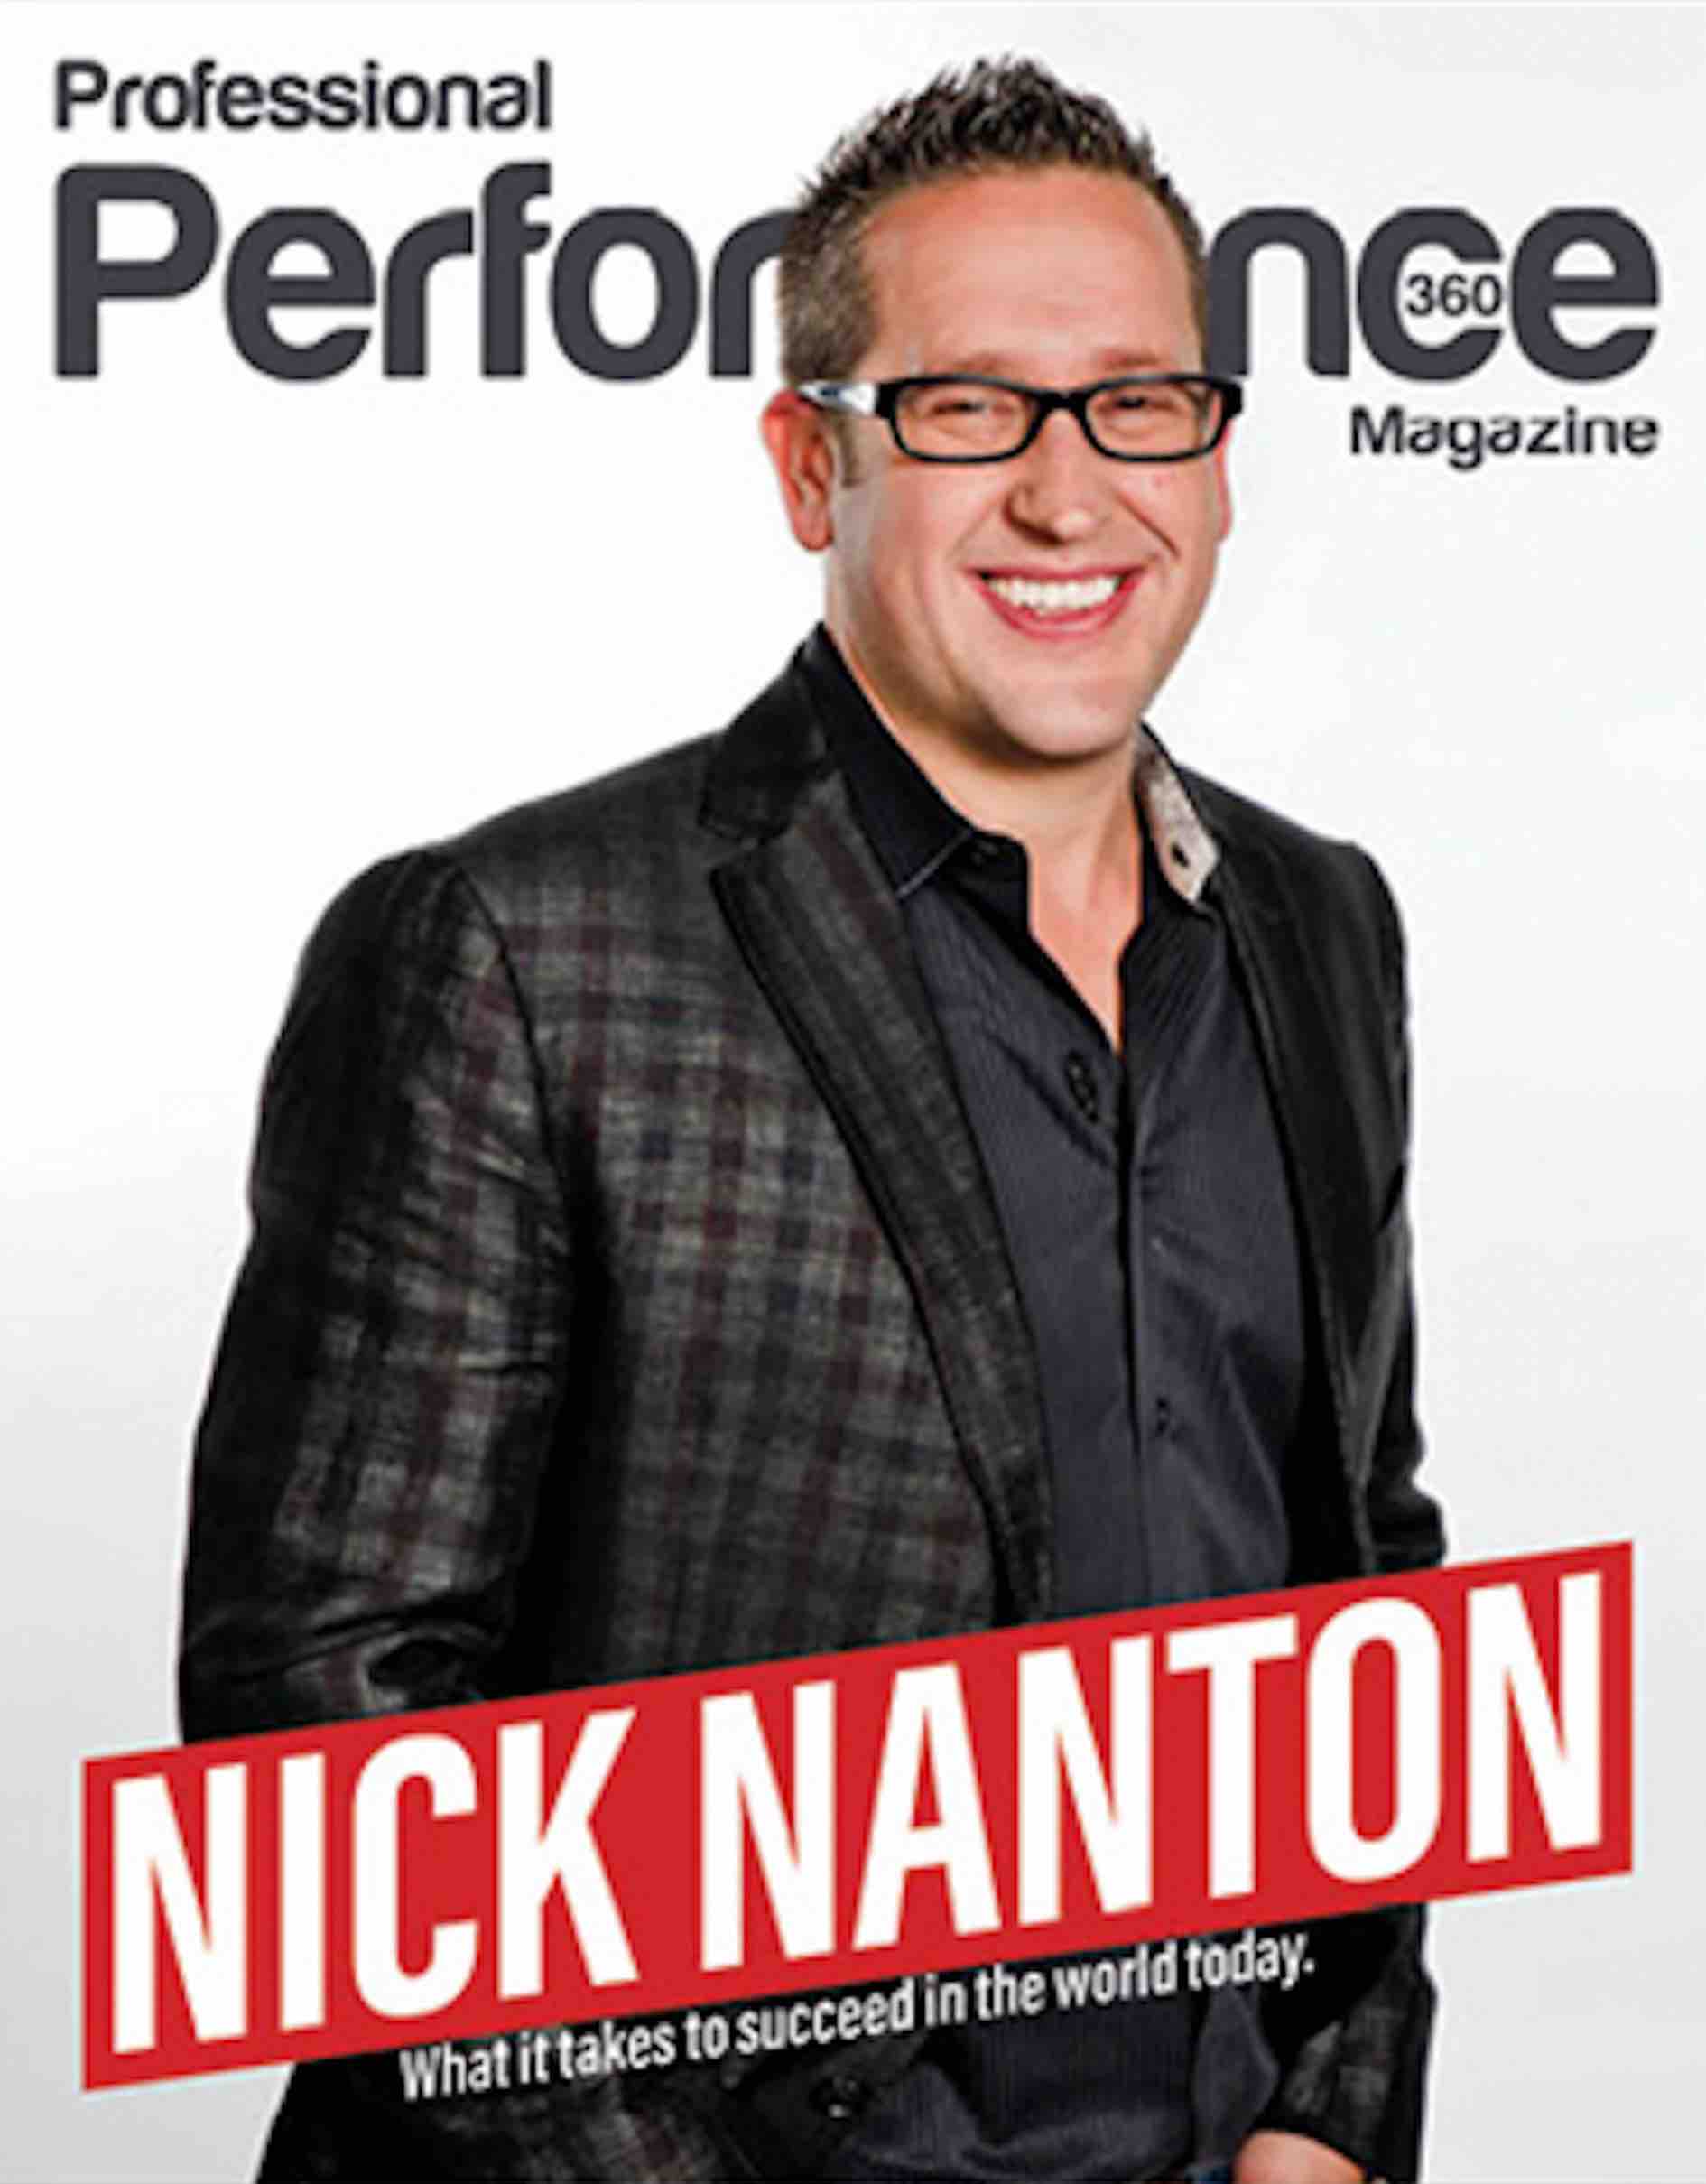 Nick Nanton